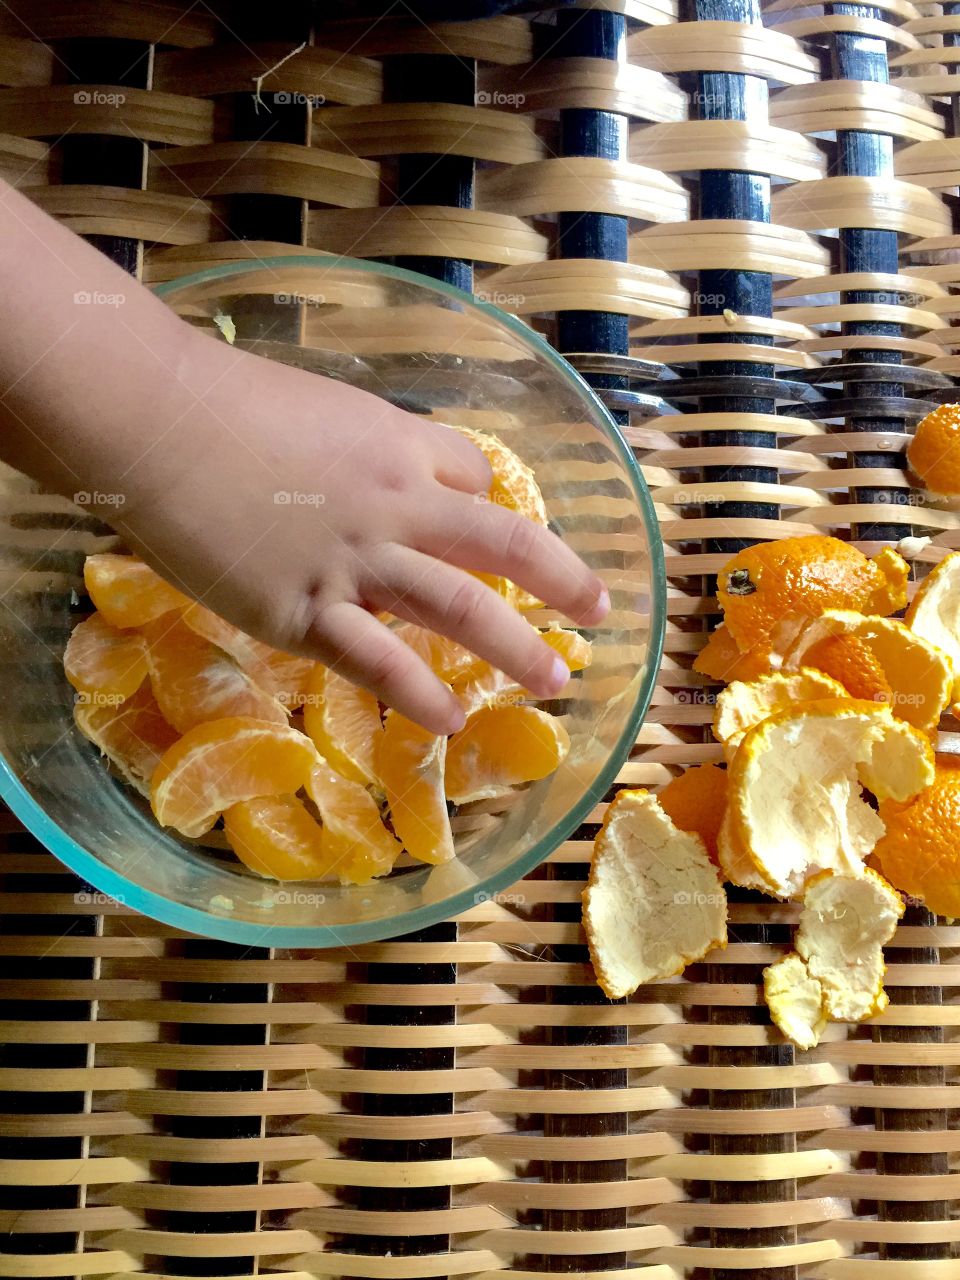 Eating oranges